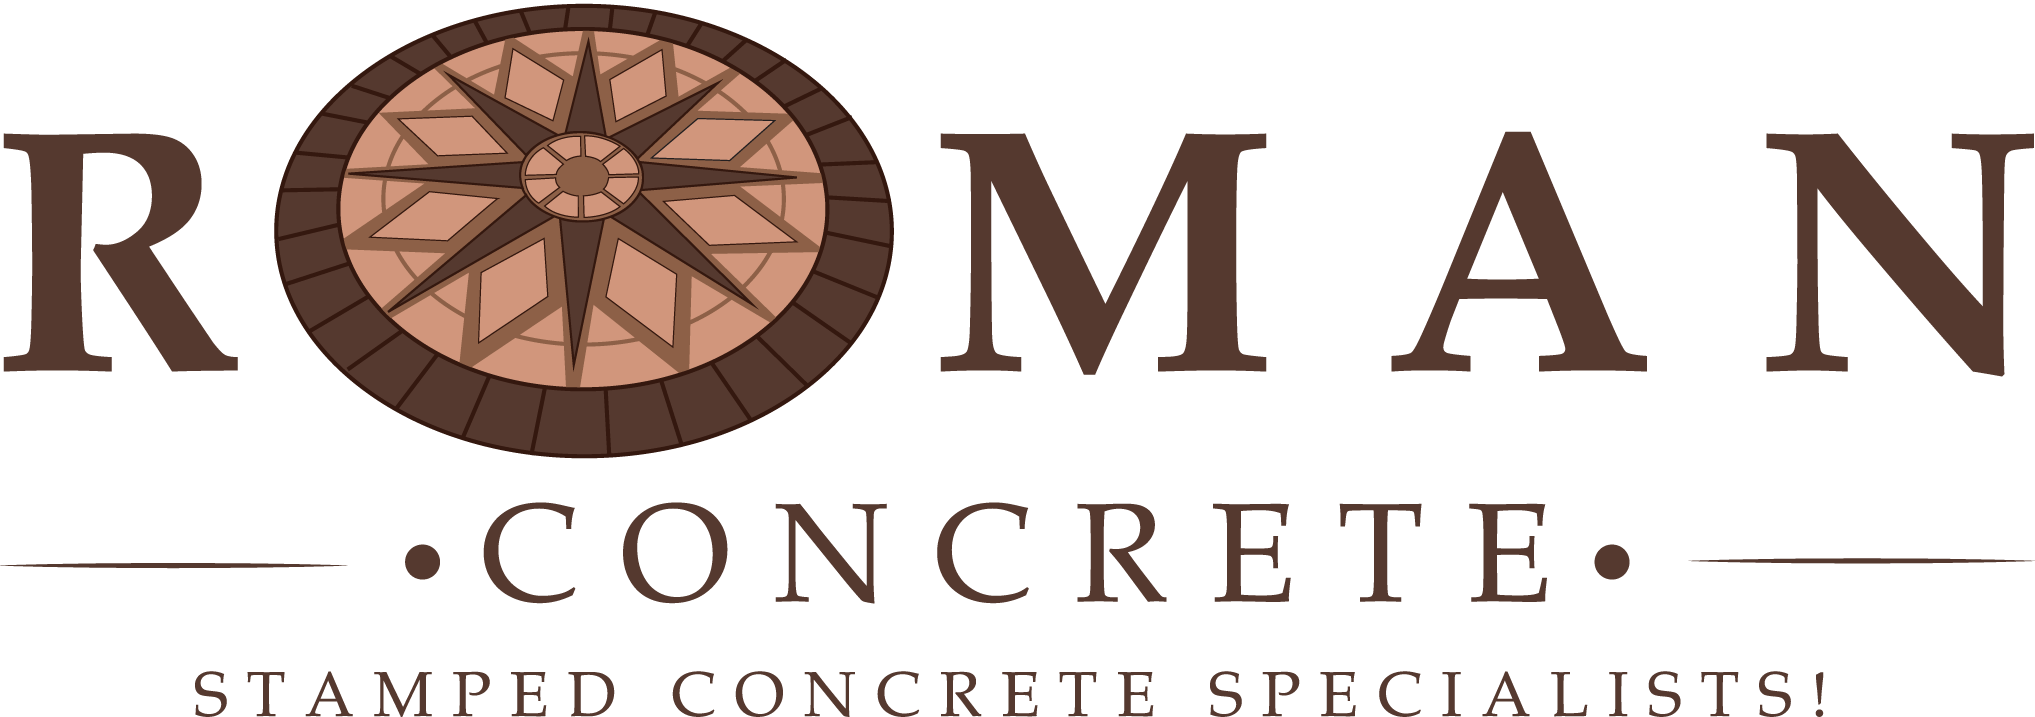 Roman Concrete - Stamped Concrete Specialists - Logo